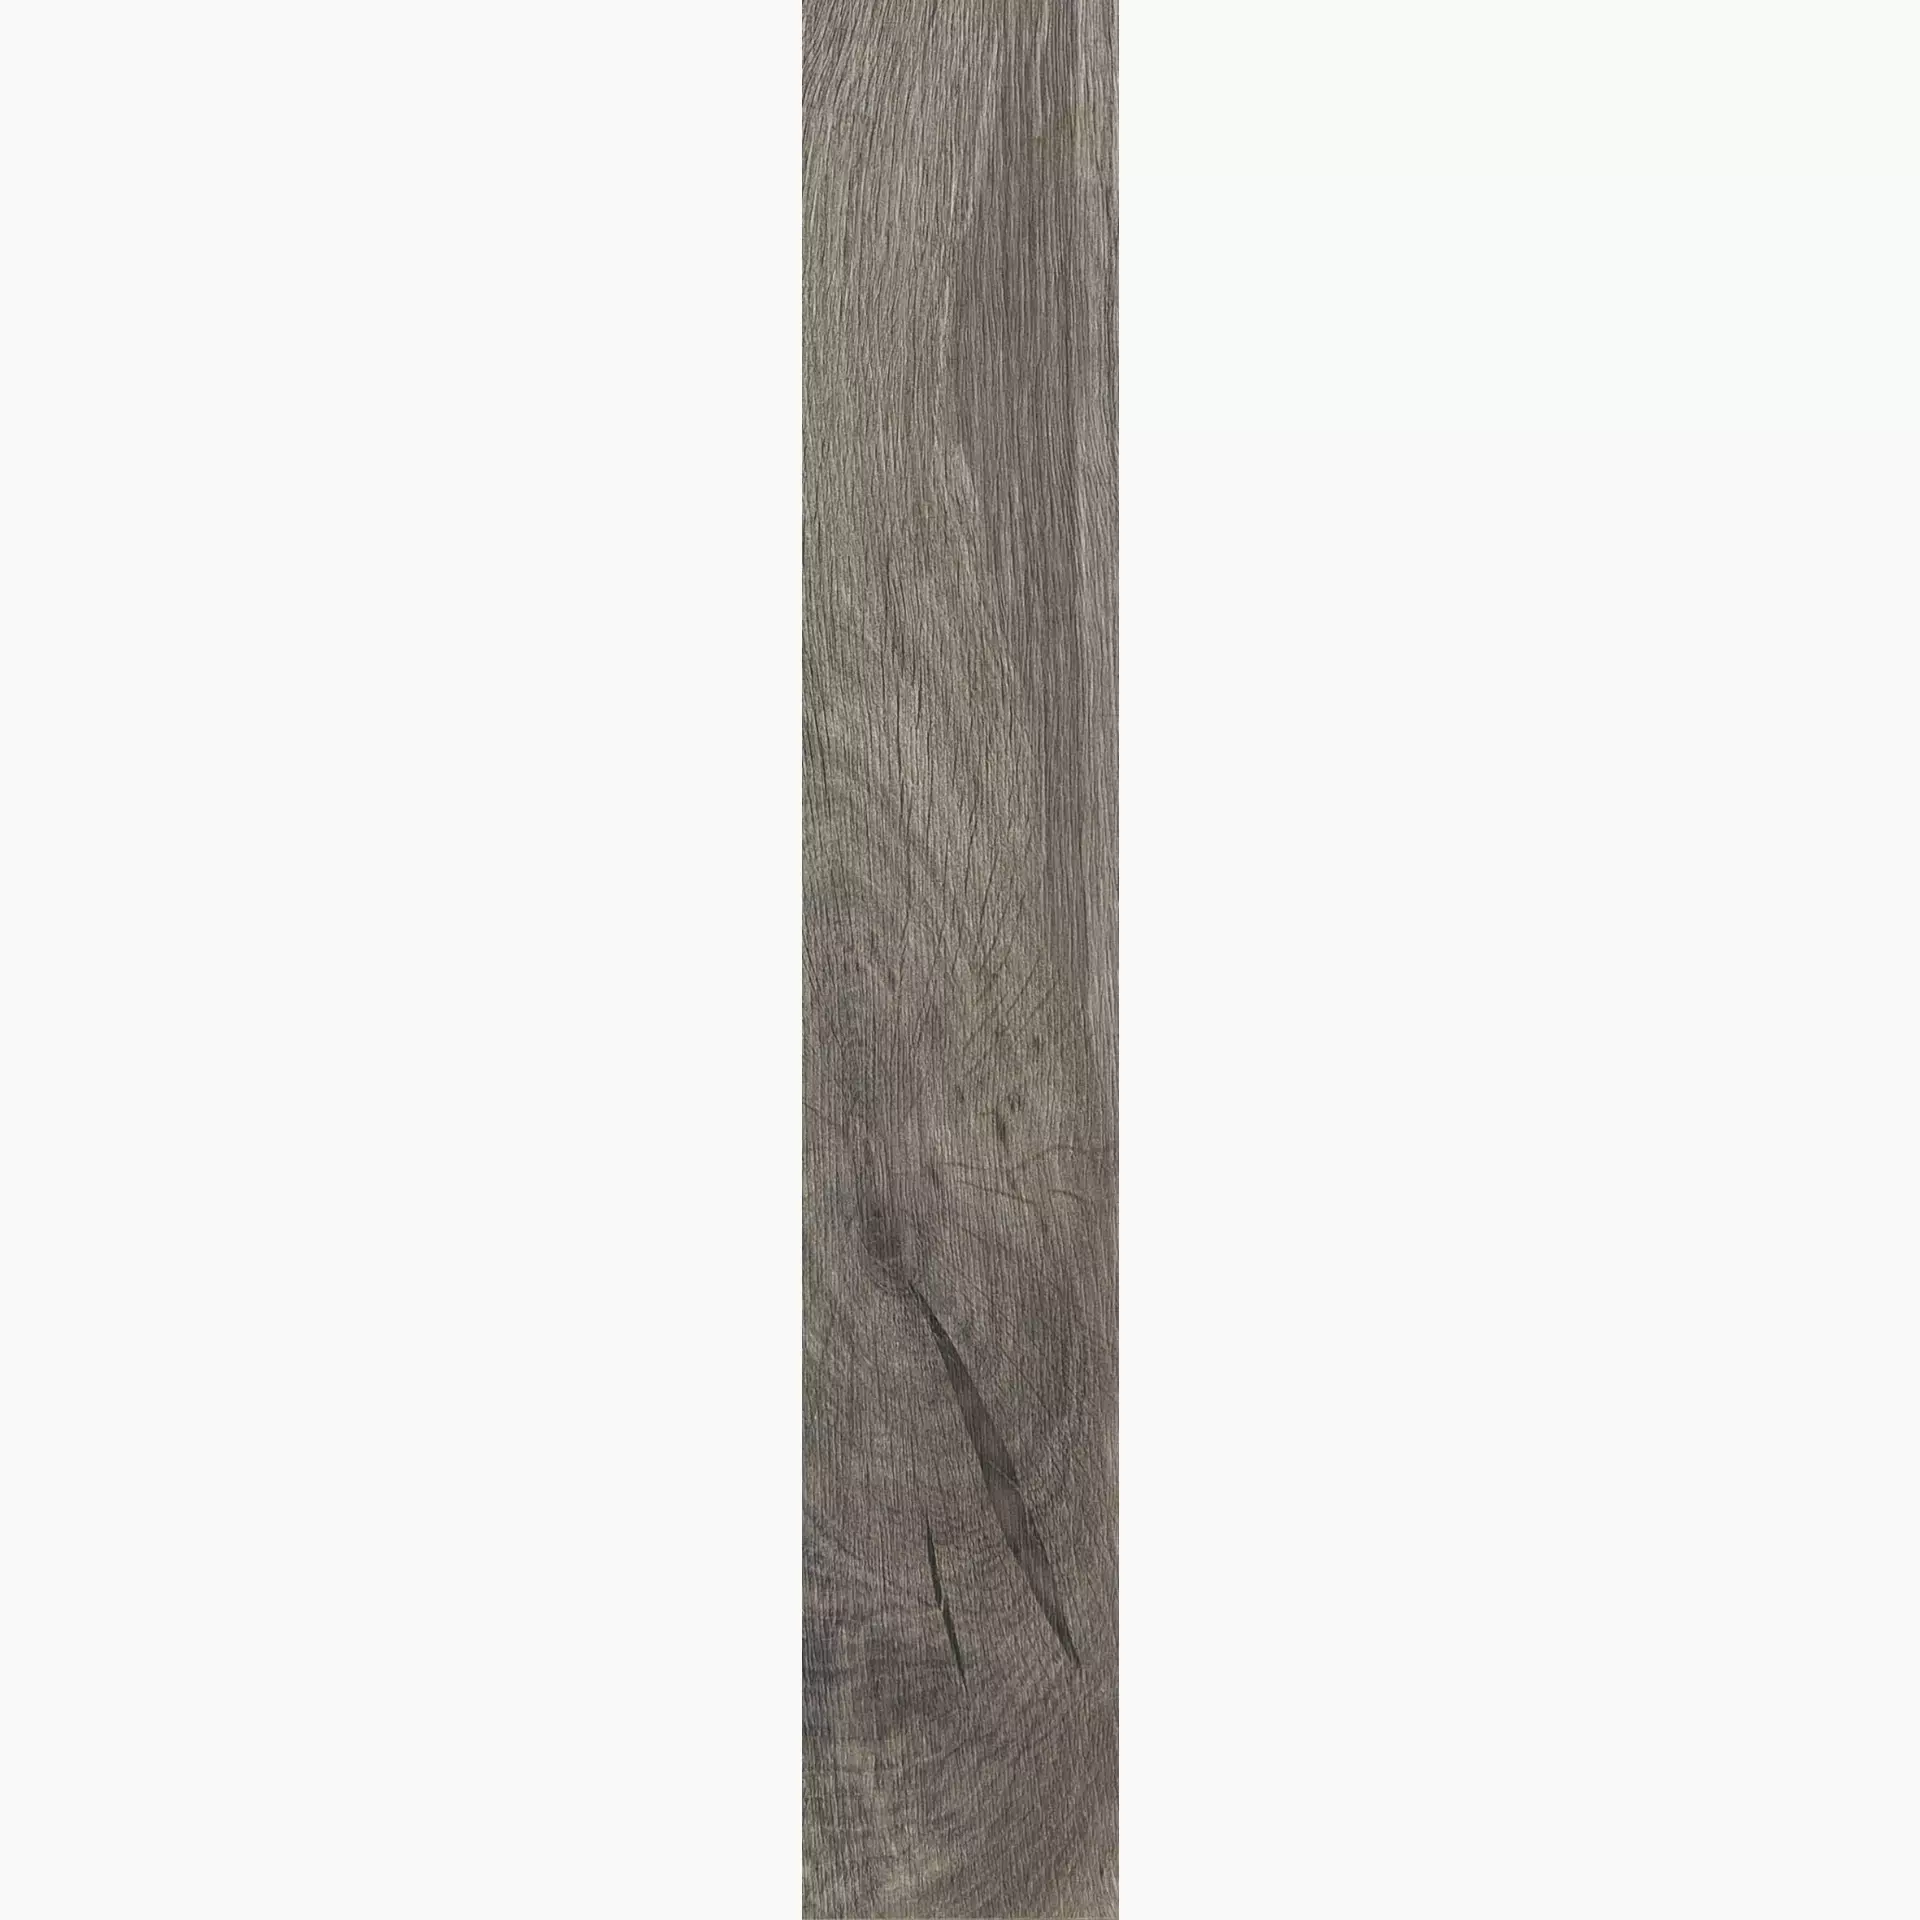 Florim Planches De Rex Perle Naturale – Matt 755610 20x120cm rectified 9mm